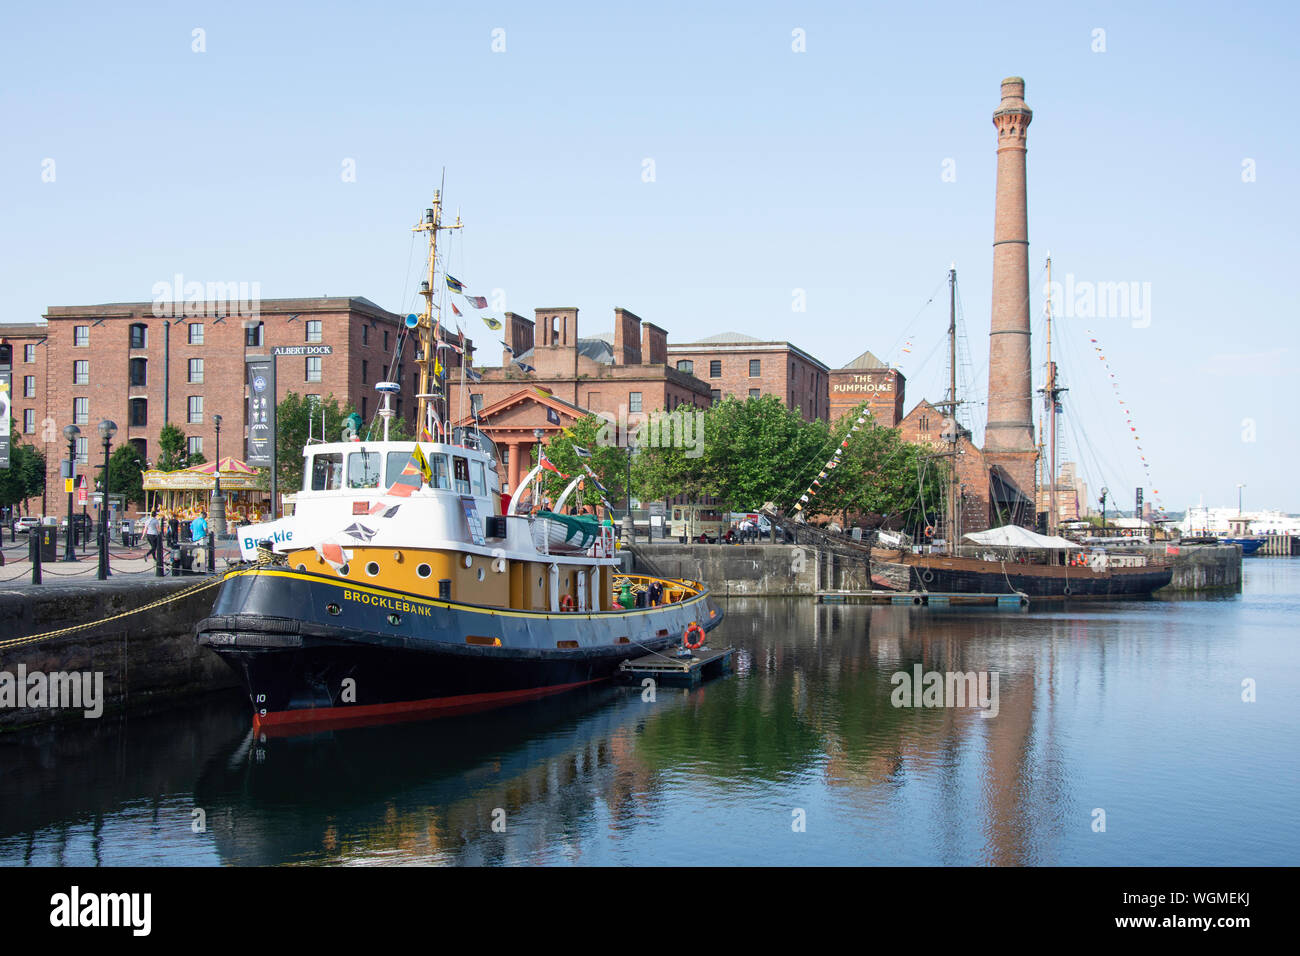 Brocklebank Tug Boat Museum und die Royal Albert Dock, Liverpool Waterfront, Liverpool, Merseyside, England, Vereinigtes Königreich Stockfoto